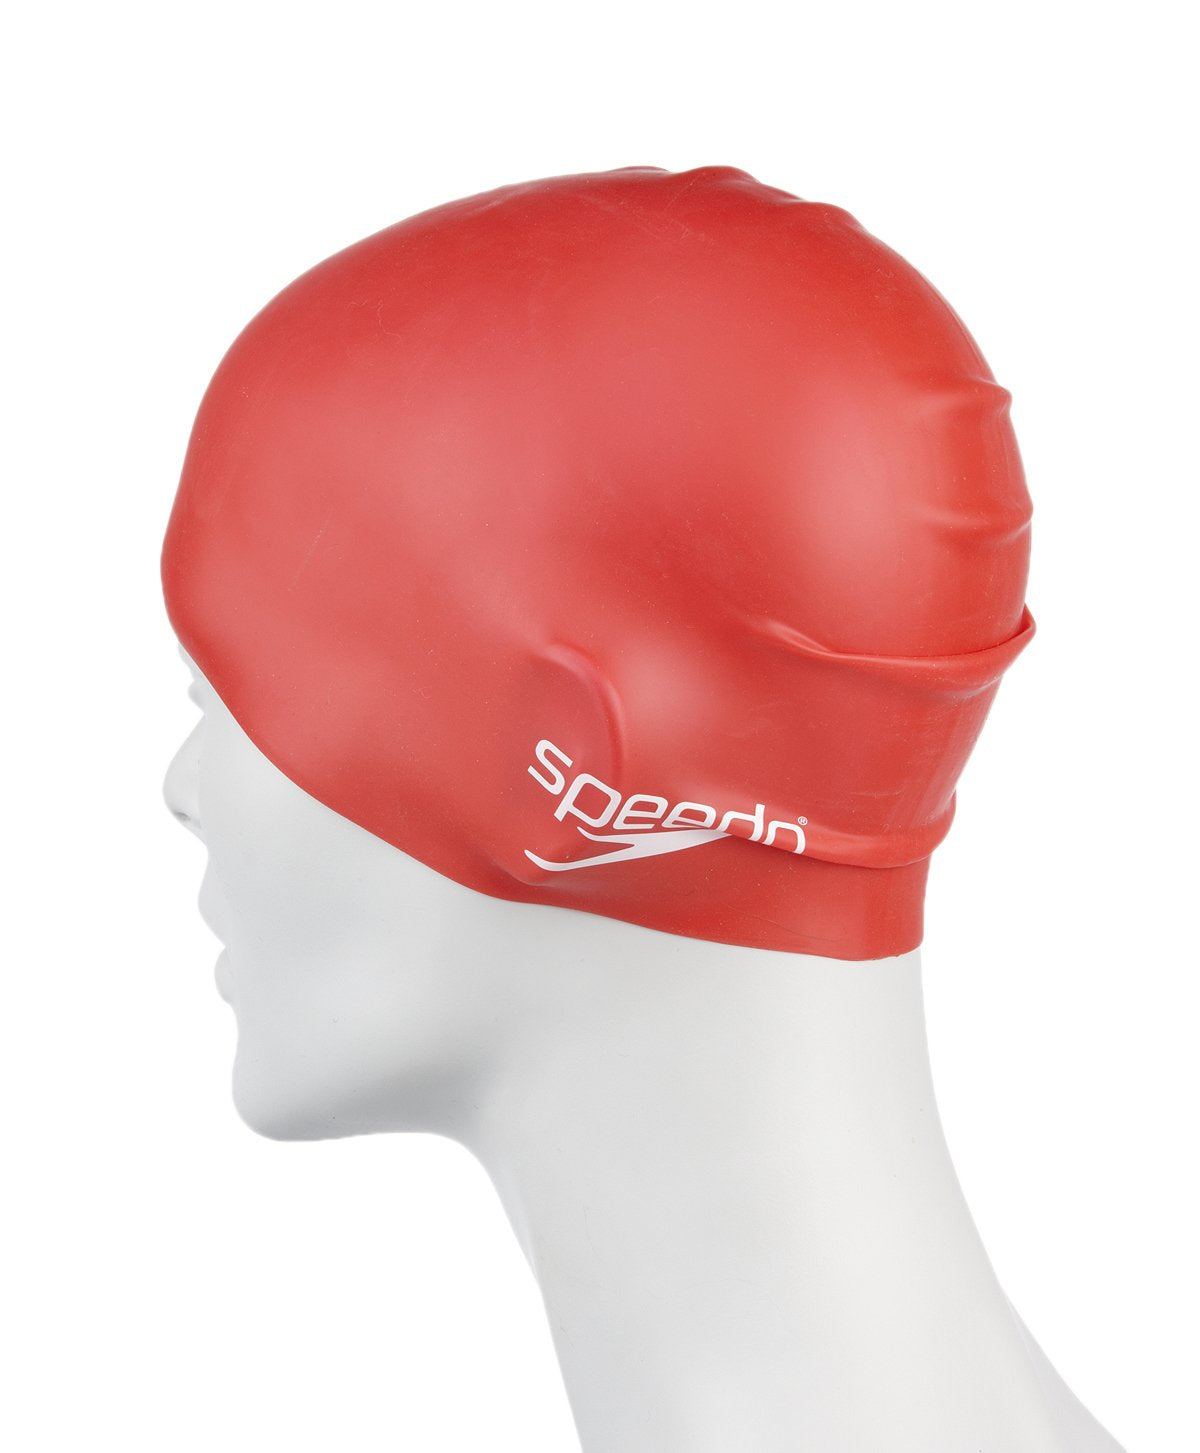 Speedo Unisex-Junior Plain Moulded Silicone Swimcap (Red) - Best Price online Prokicksports.com